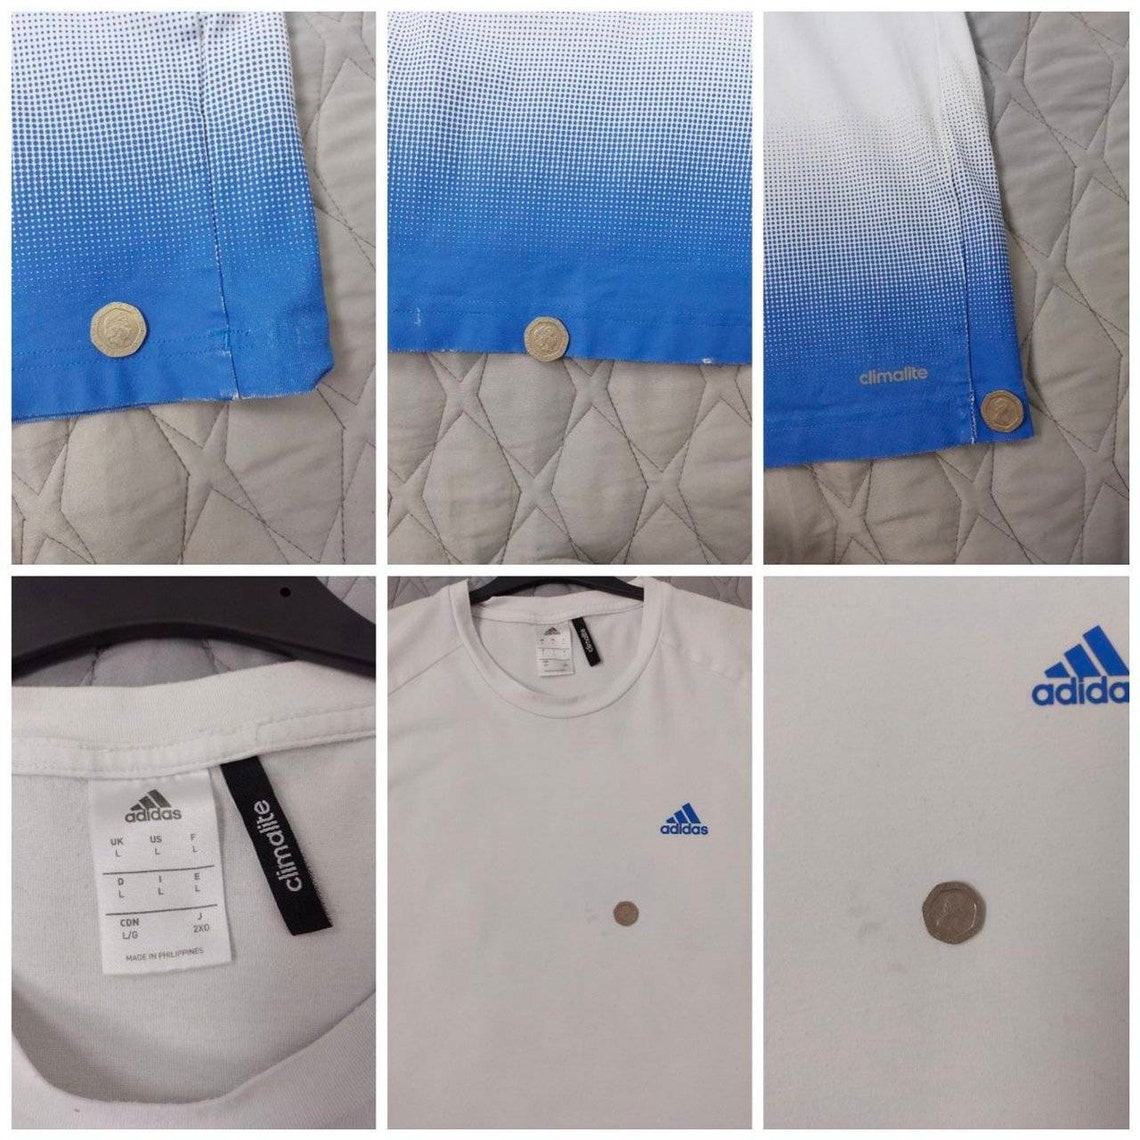 Adidas Sports Shirt White/Blue | Etsy